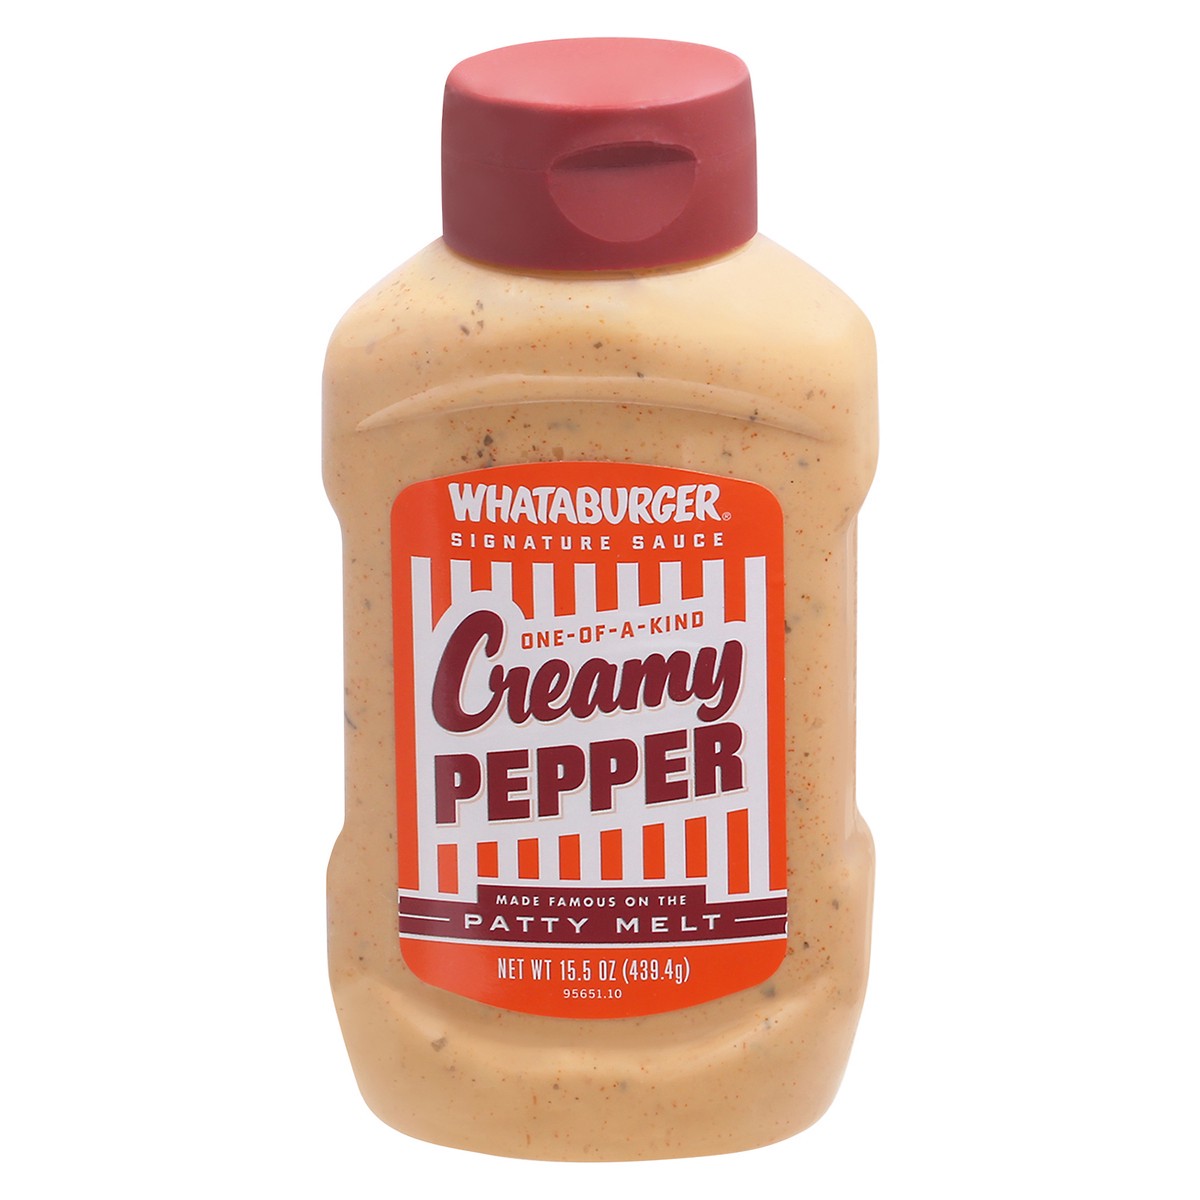 slide 1 of 14, Whataburger One-of-a-Kind Creamy Pepper Signature Sauce 15.5 oz, 15.5 oz